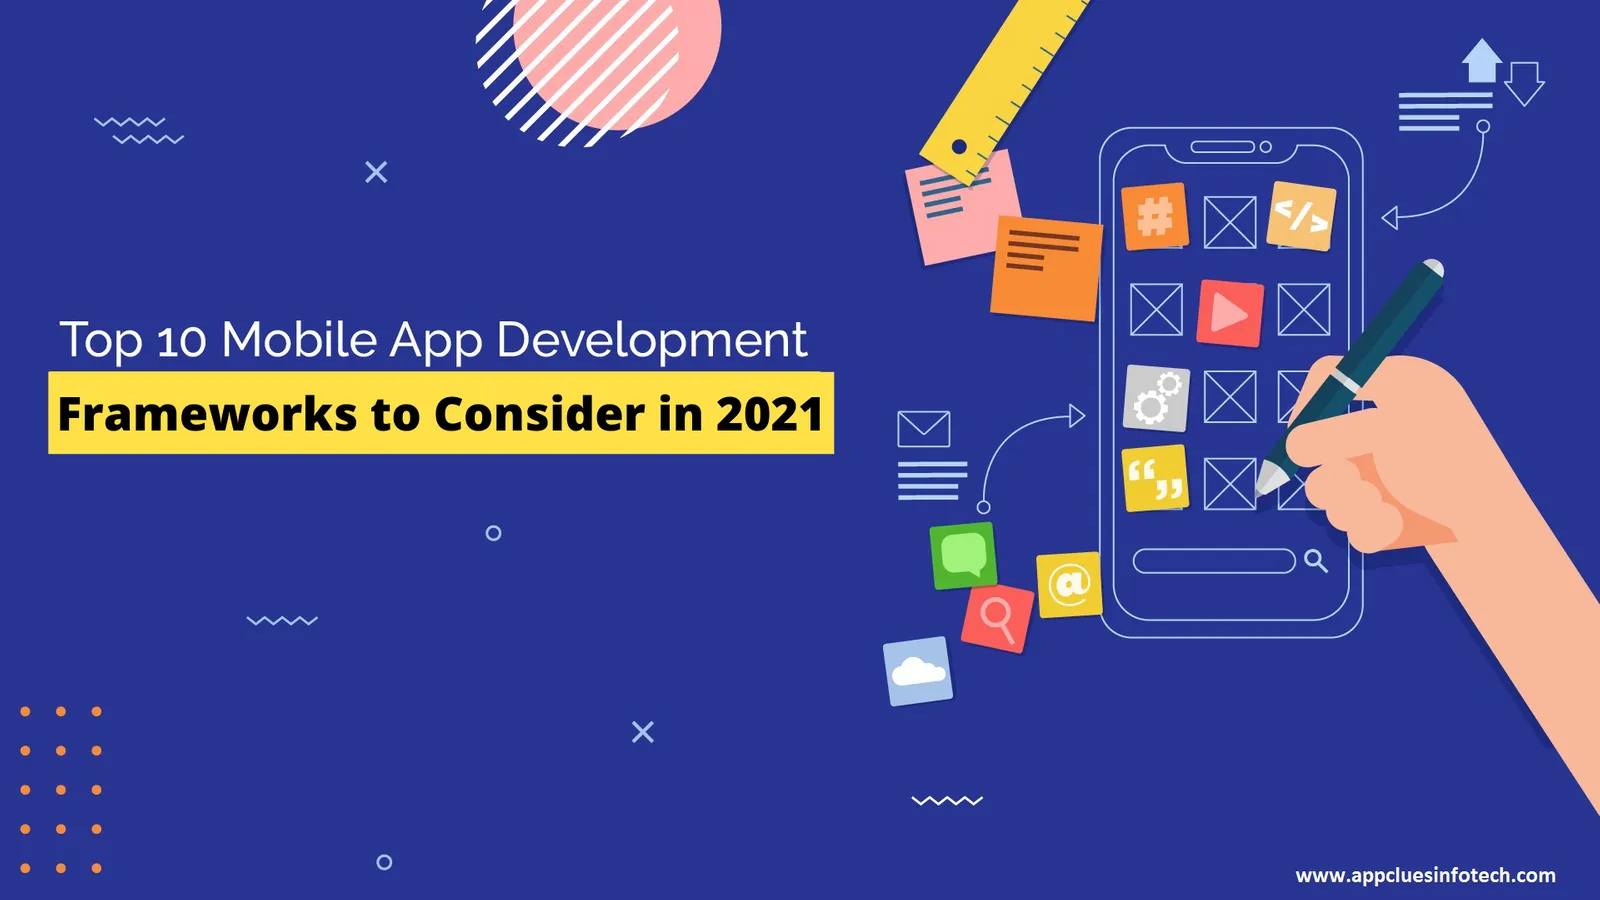 Top Mobile App Development Frameworks in 2021